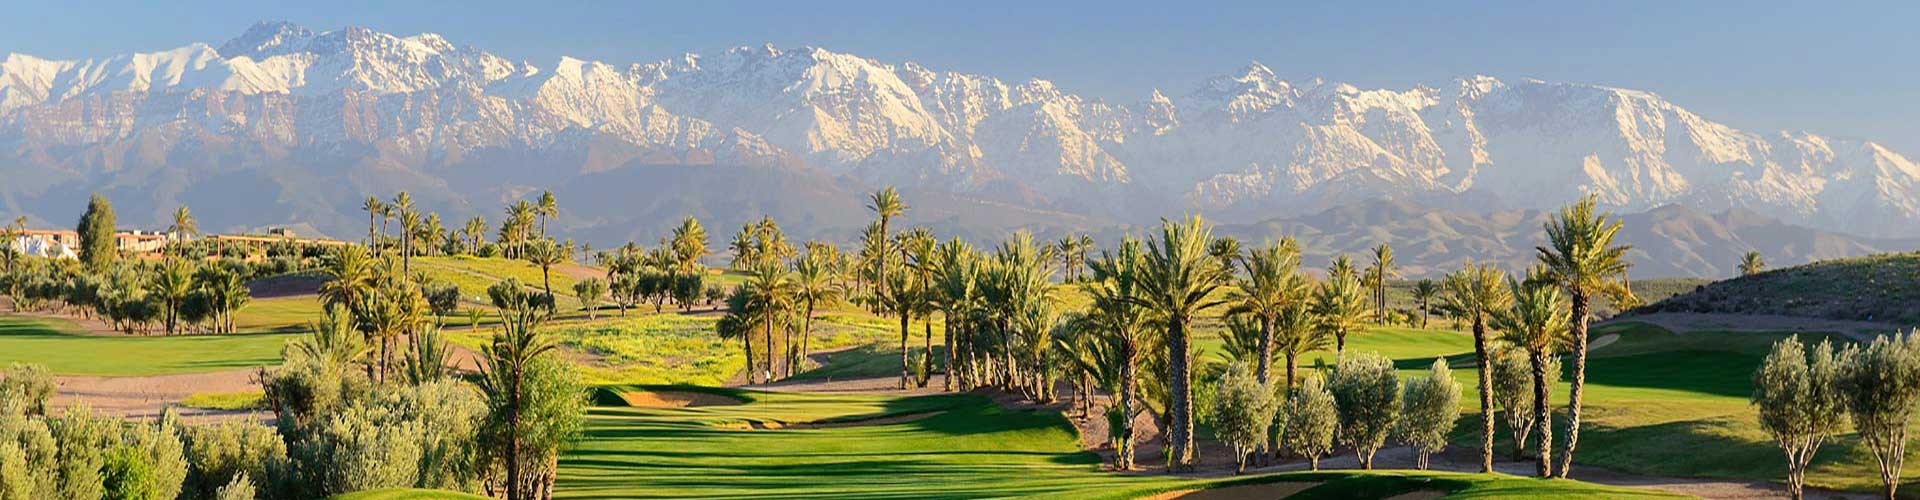 vacances golf maroc